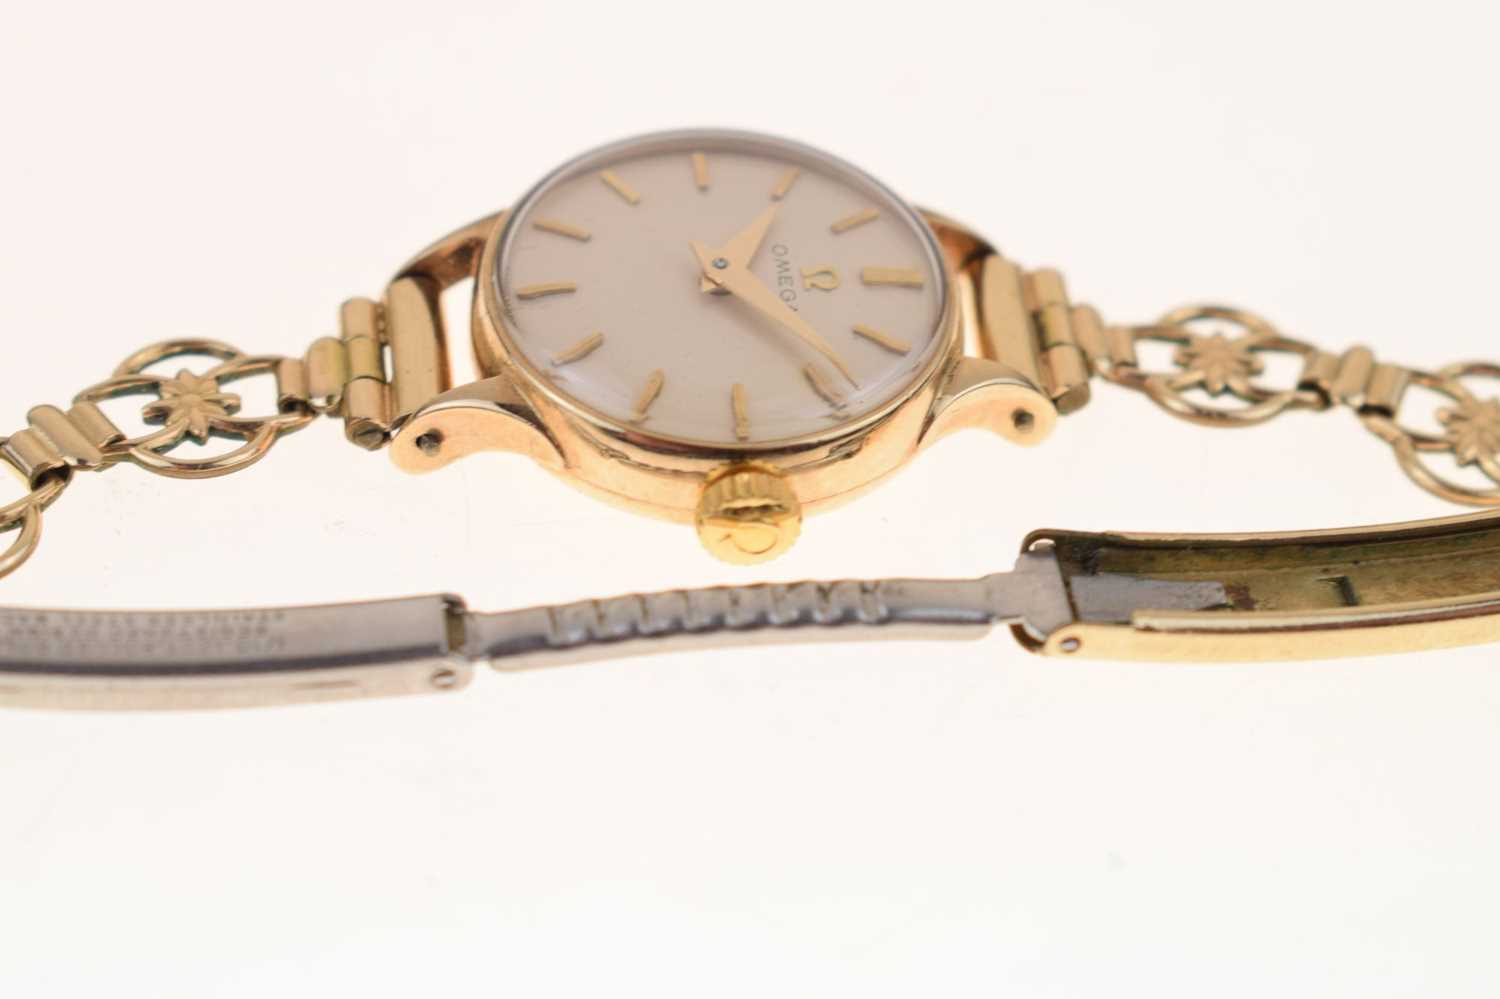 Omega - Lady's 9ct gold cased bracelet watch - Image 4 of 8